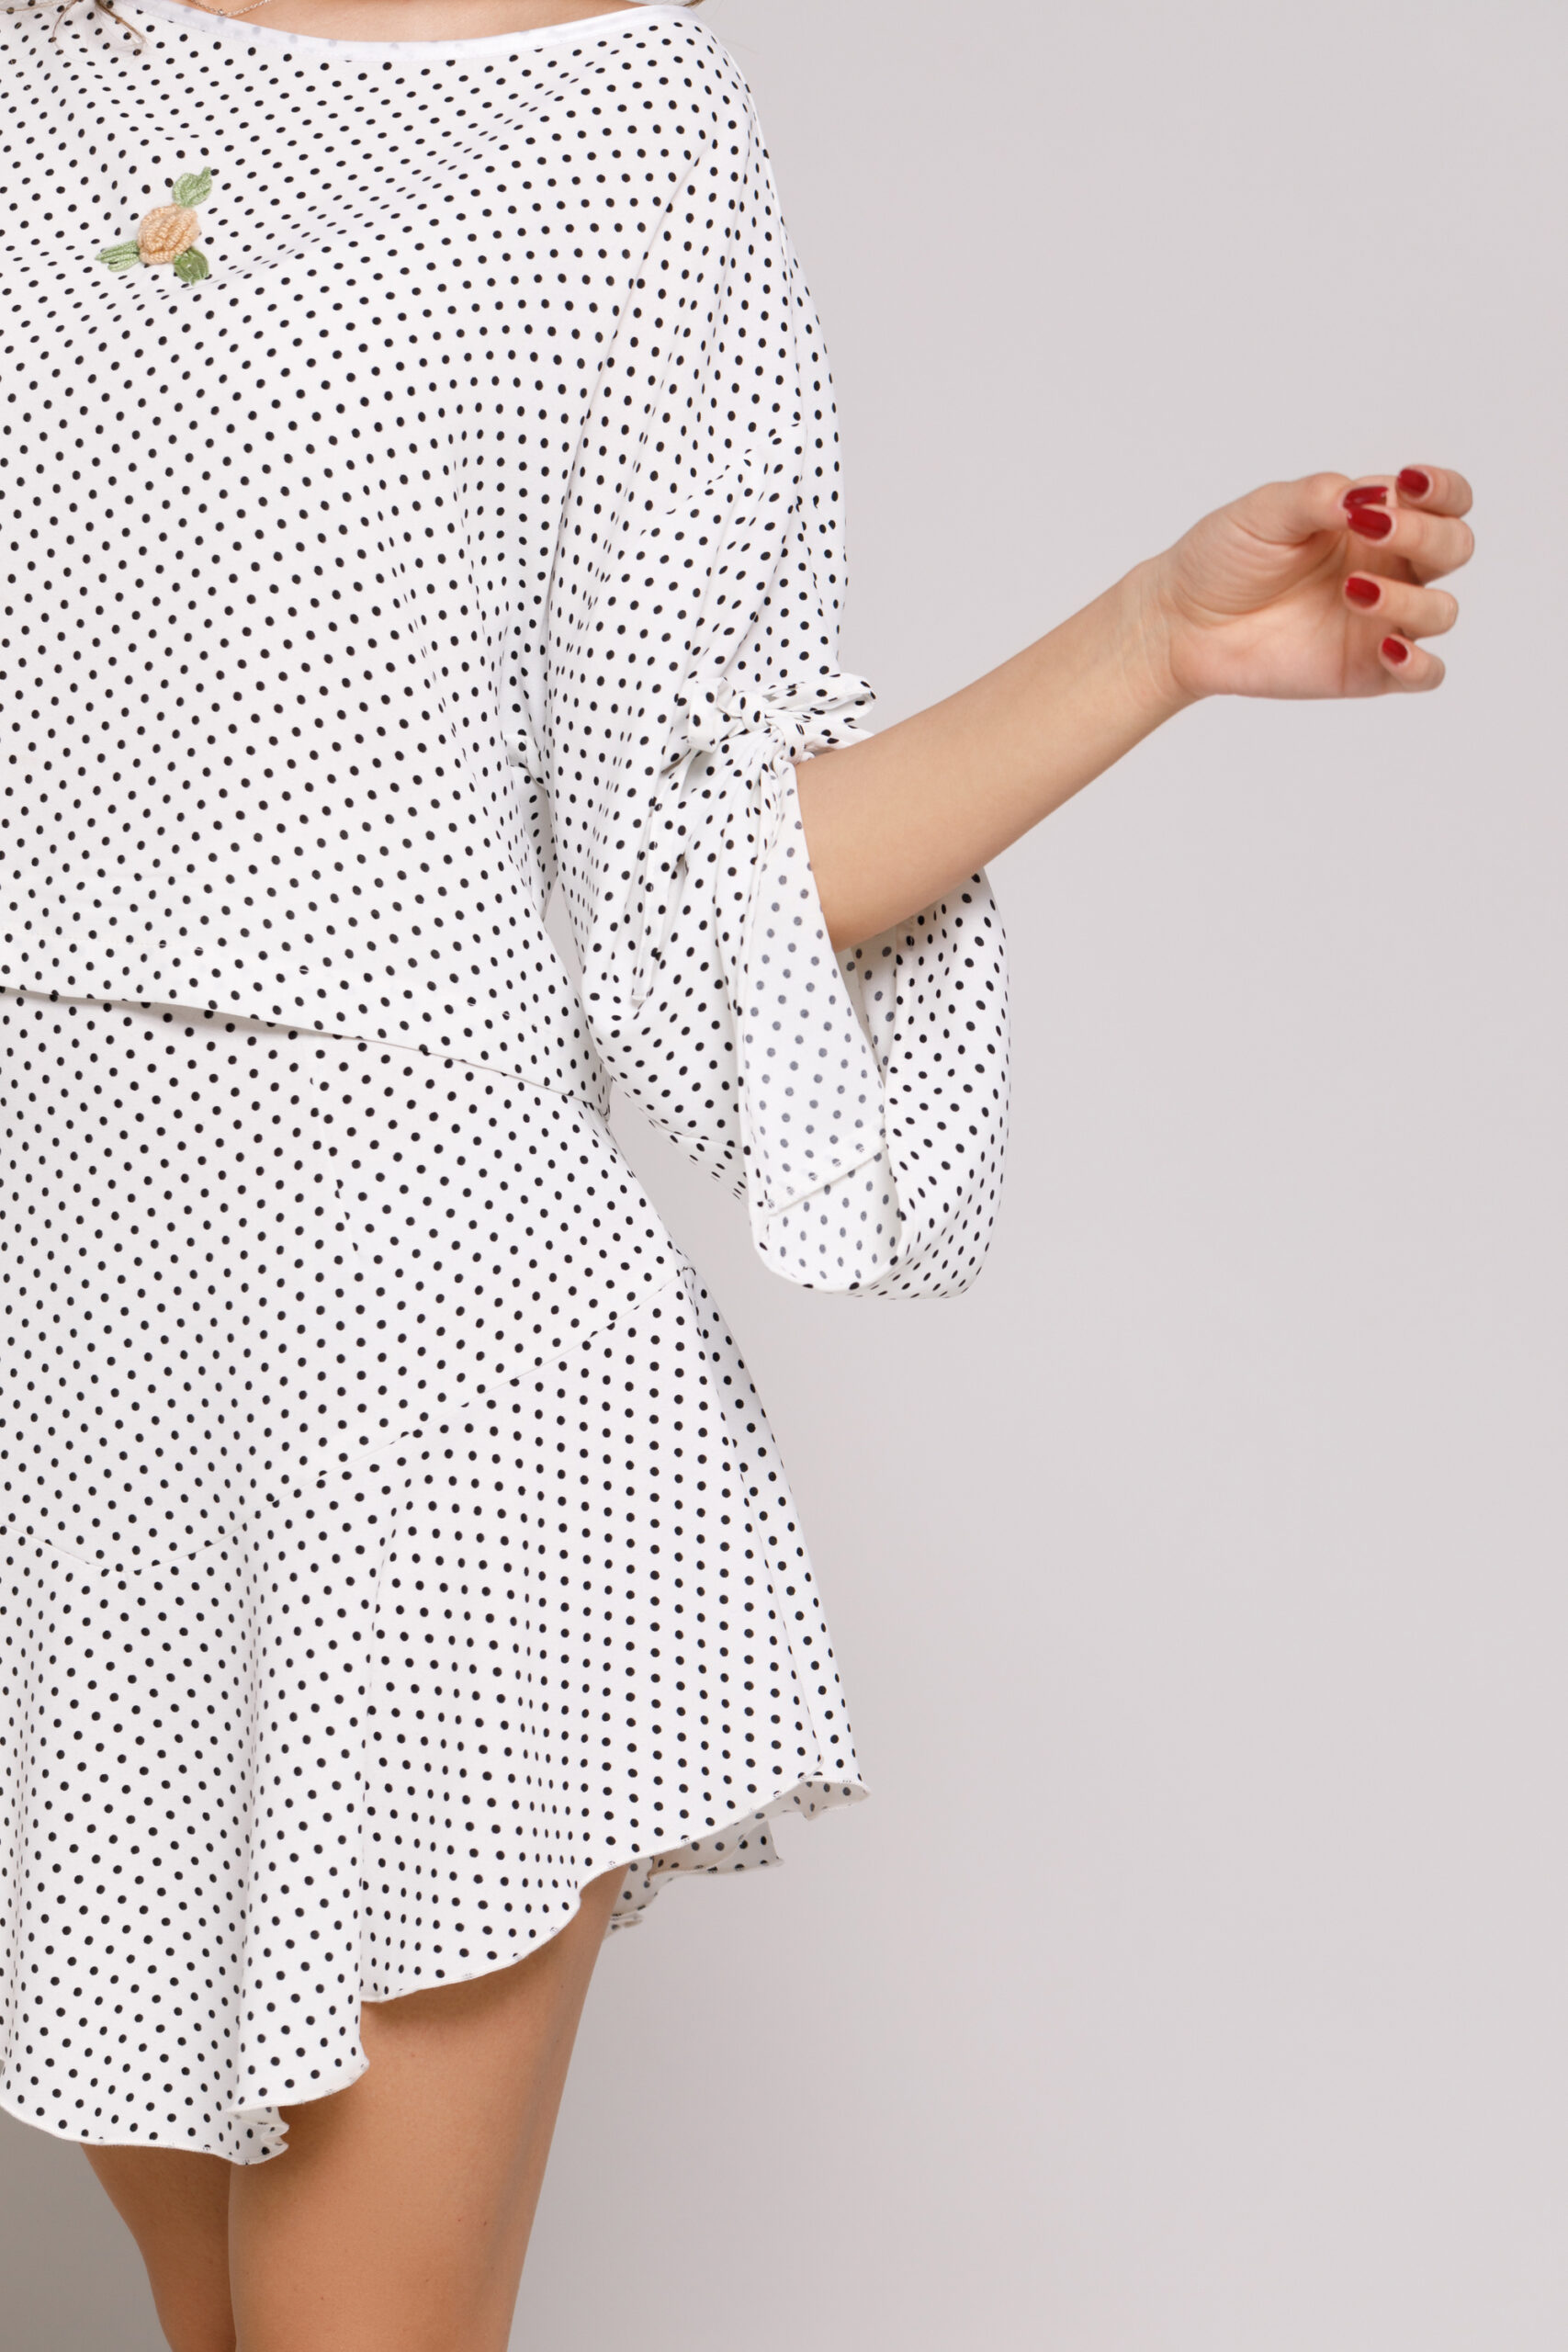 AMARA casual white viscose blouse with black dots. Natural fabrics, original design, handmade embroidery